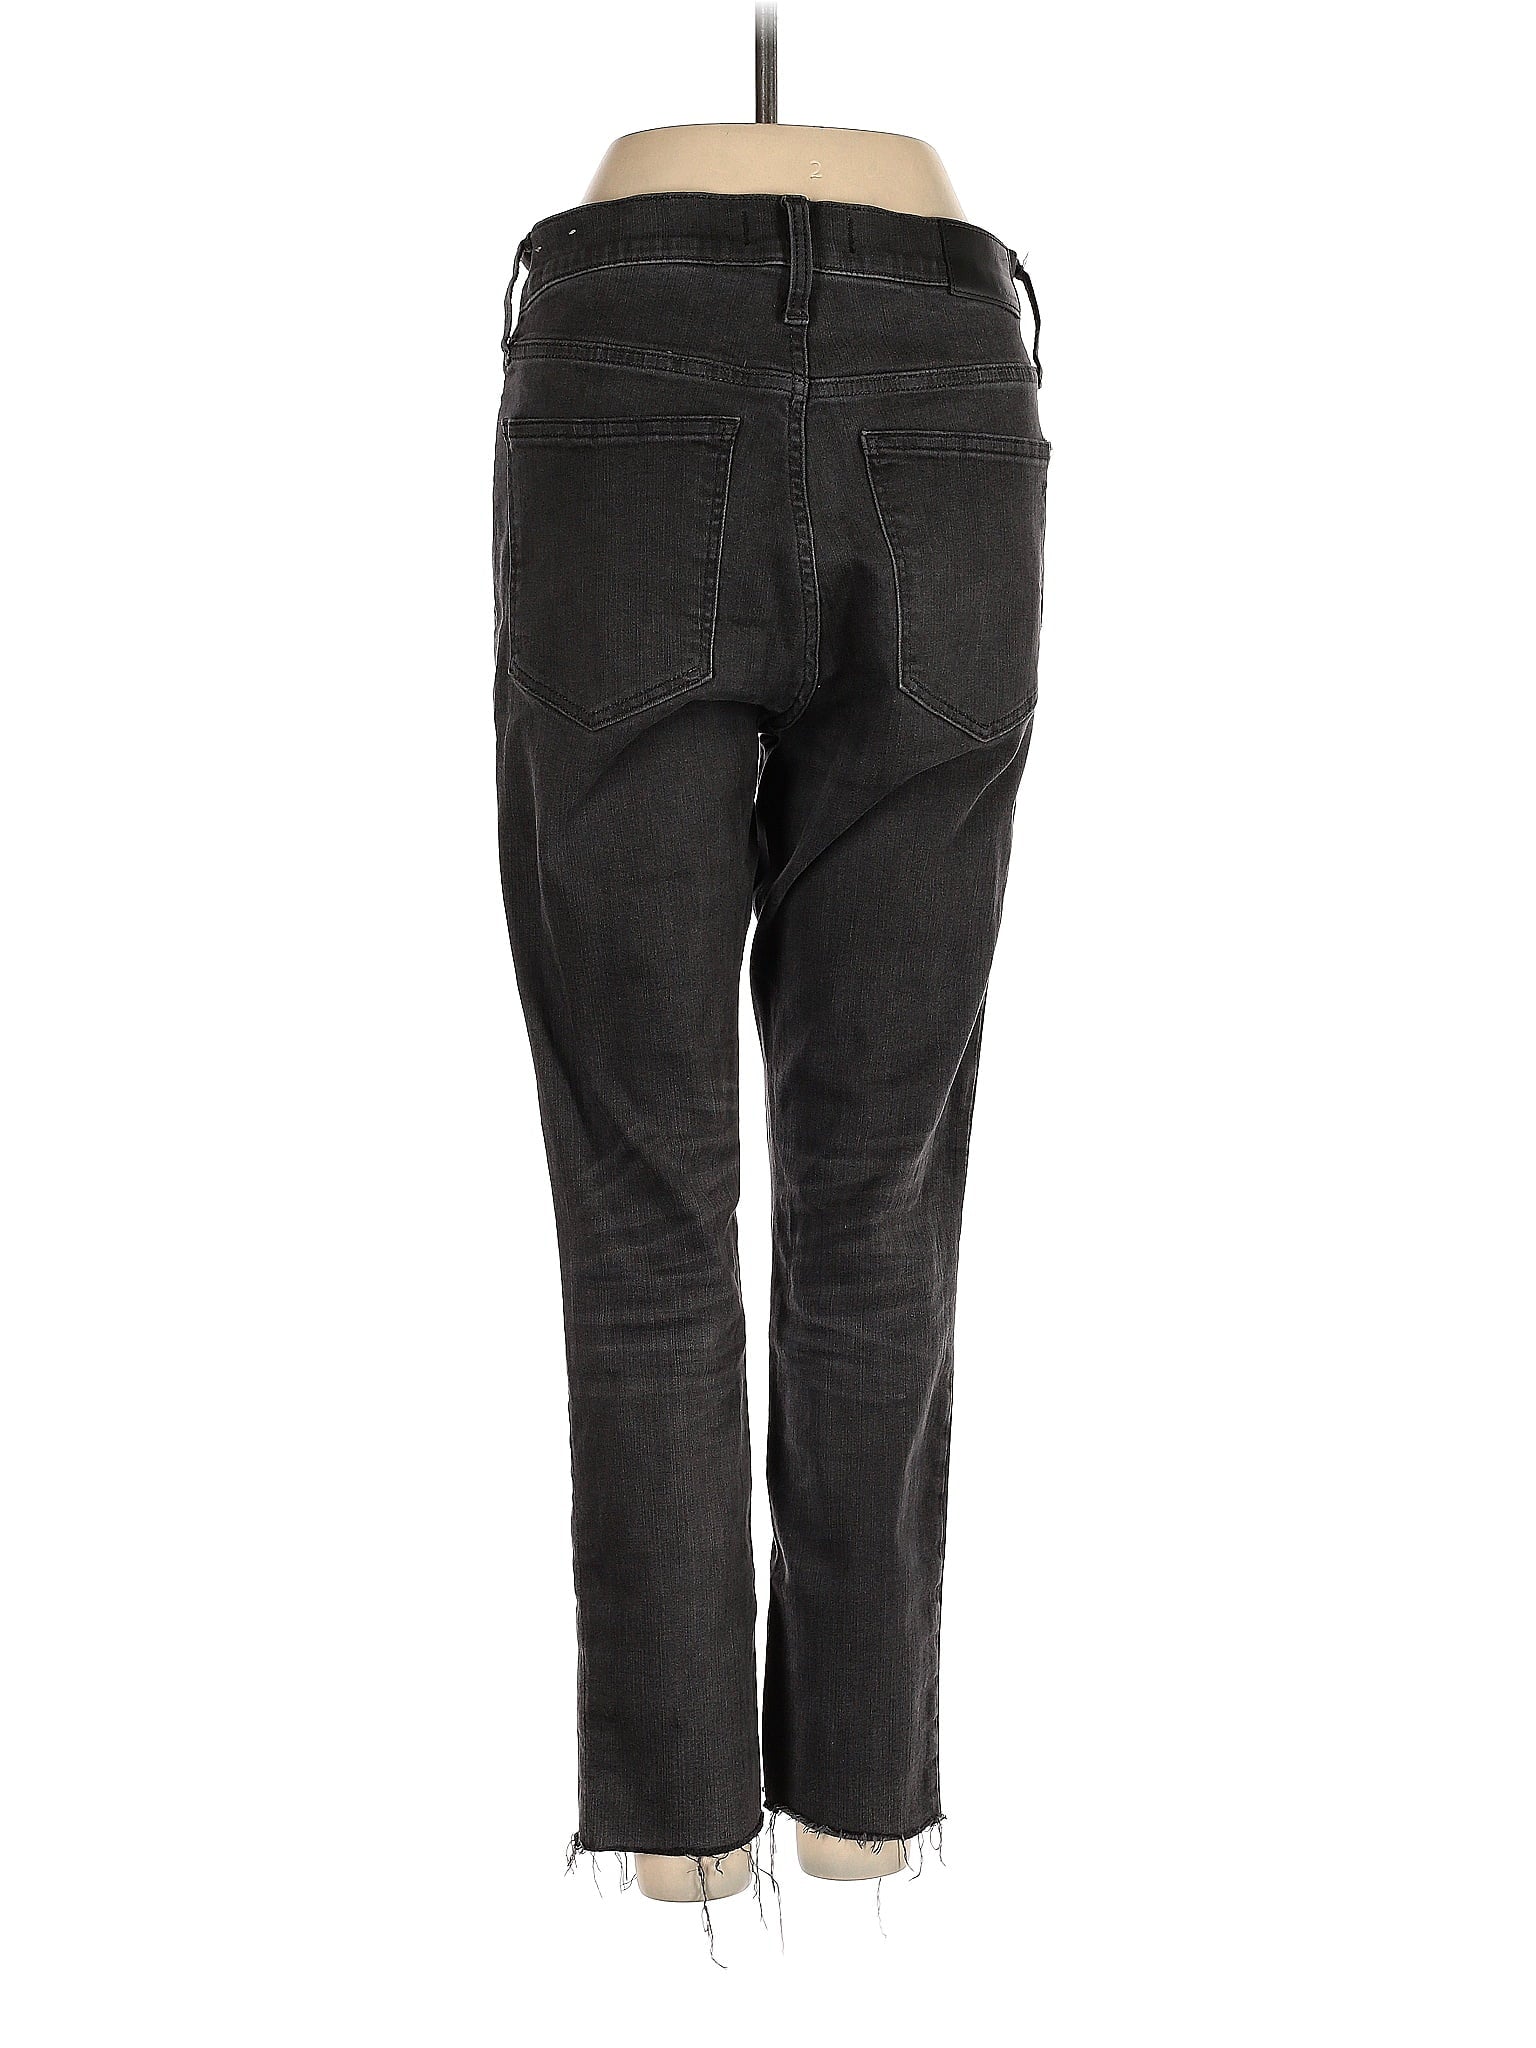 Mid-Rise Straight-leg Jeans waist size - 27